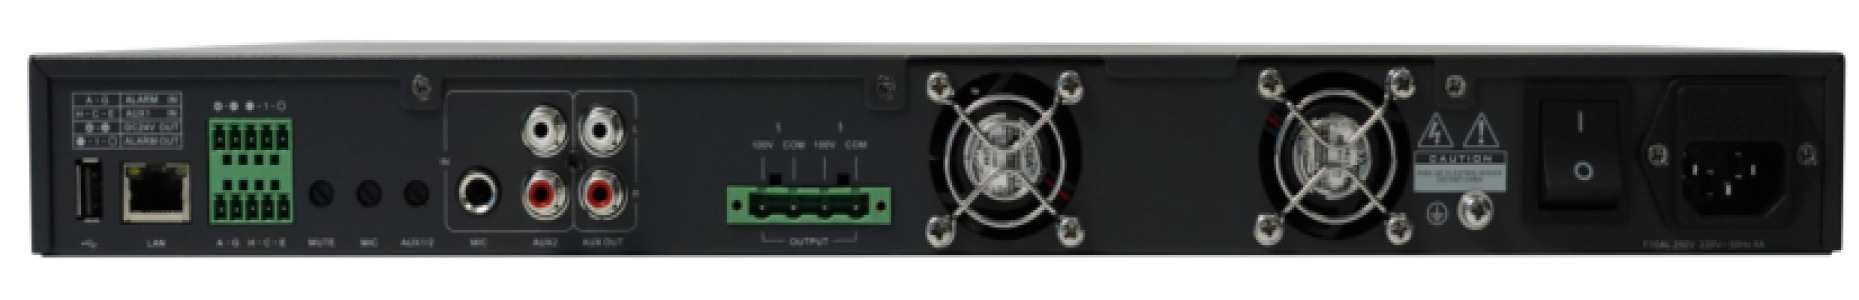 XC-9508 - 130/260/360/500 Watt 100 Volt IP Integrated Amplifier